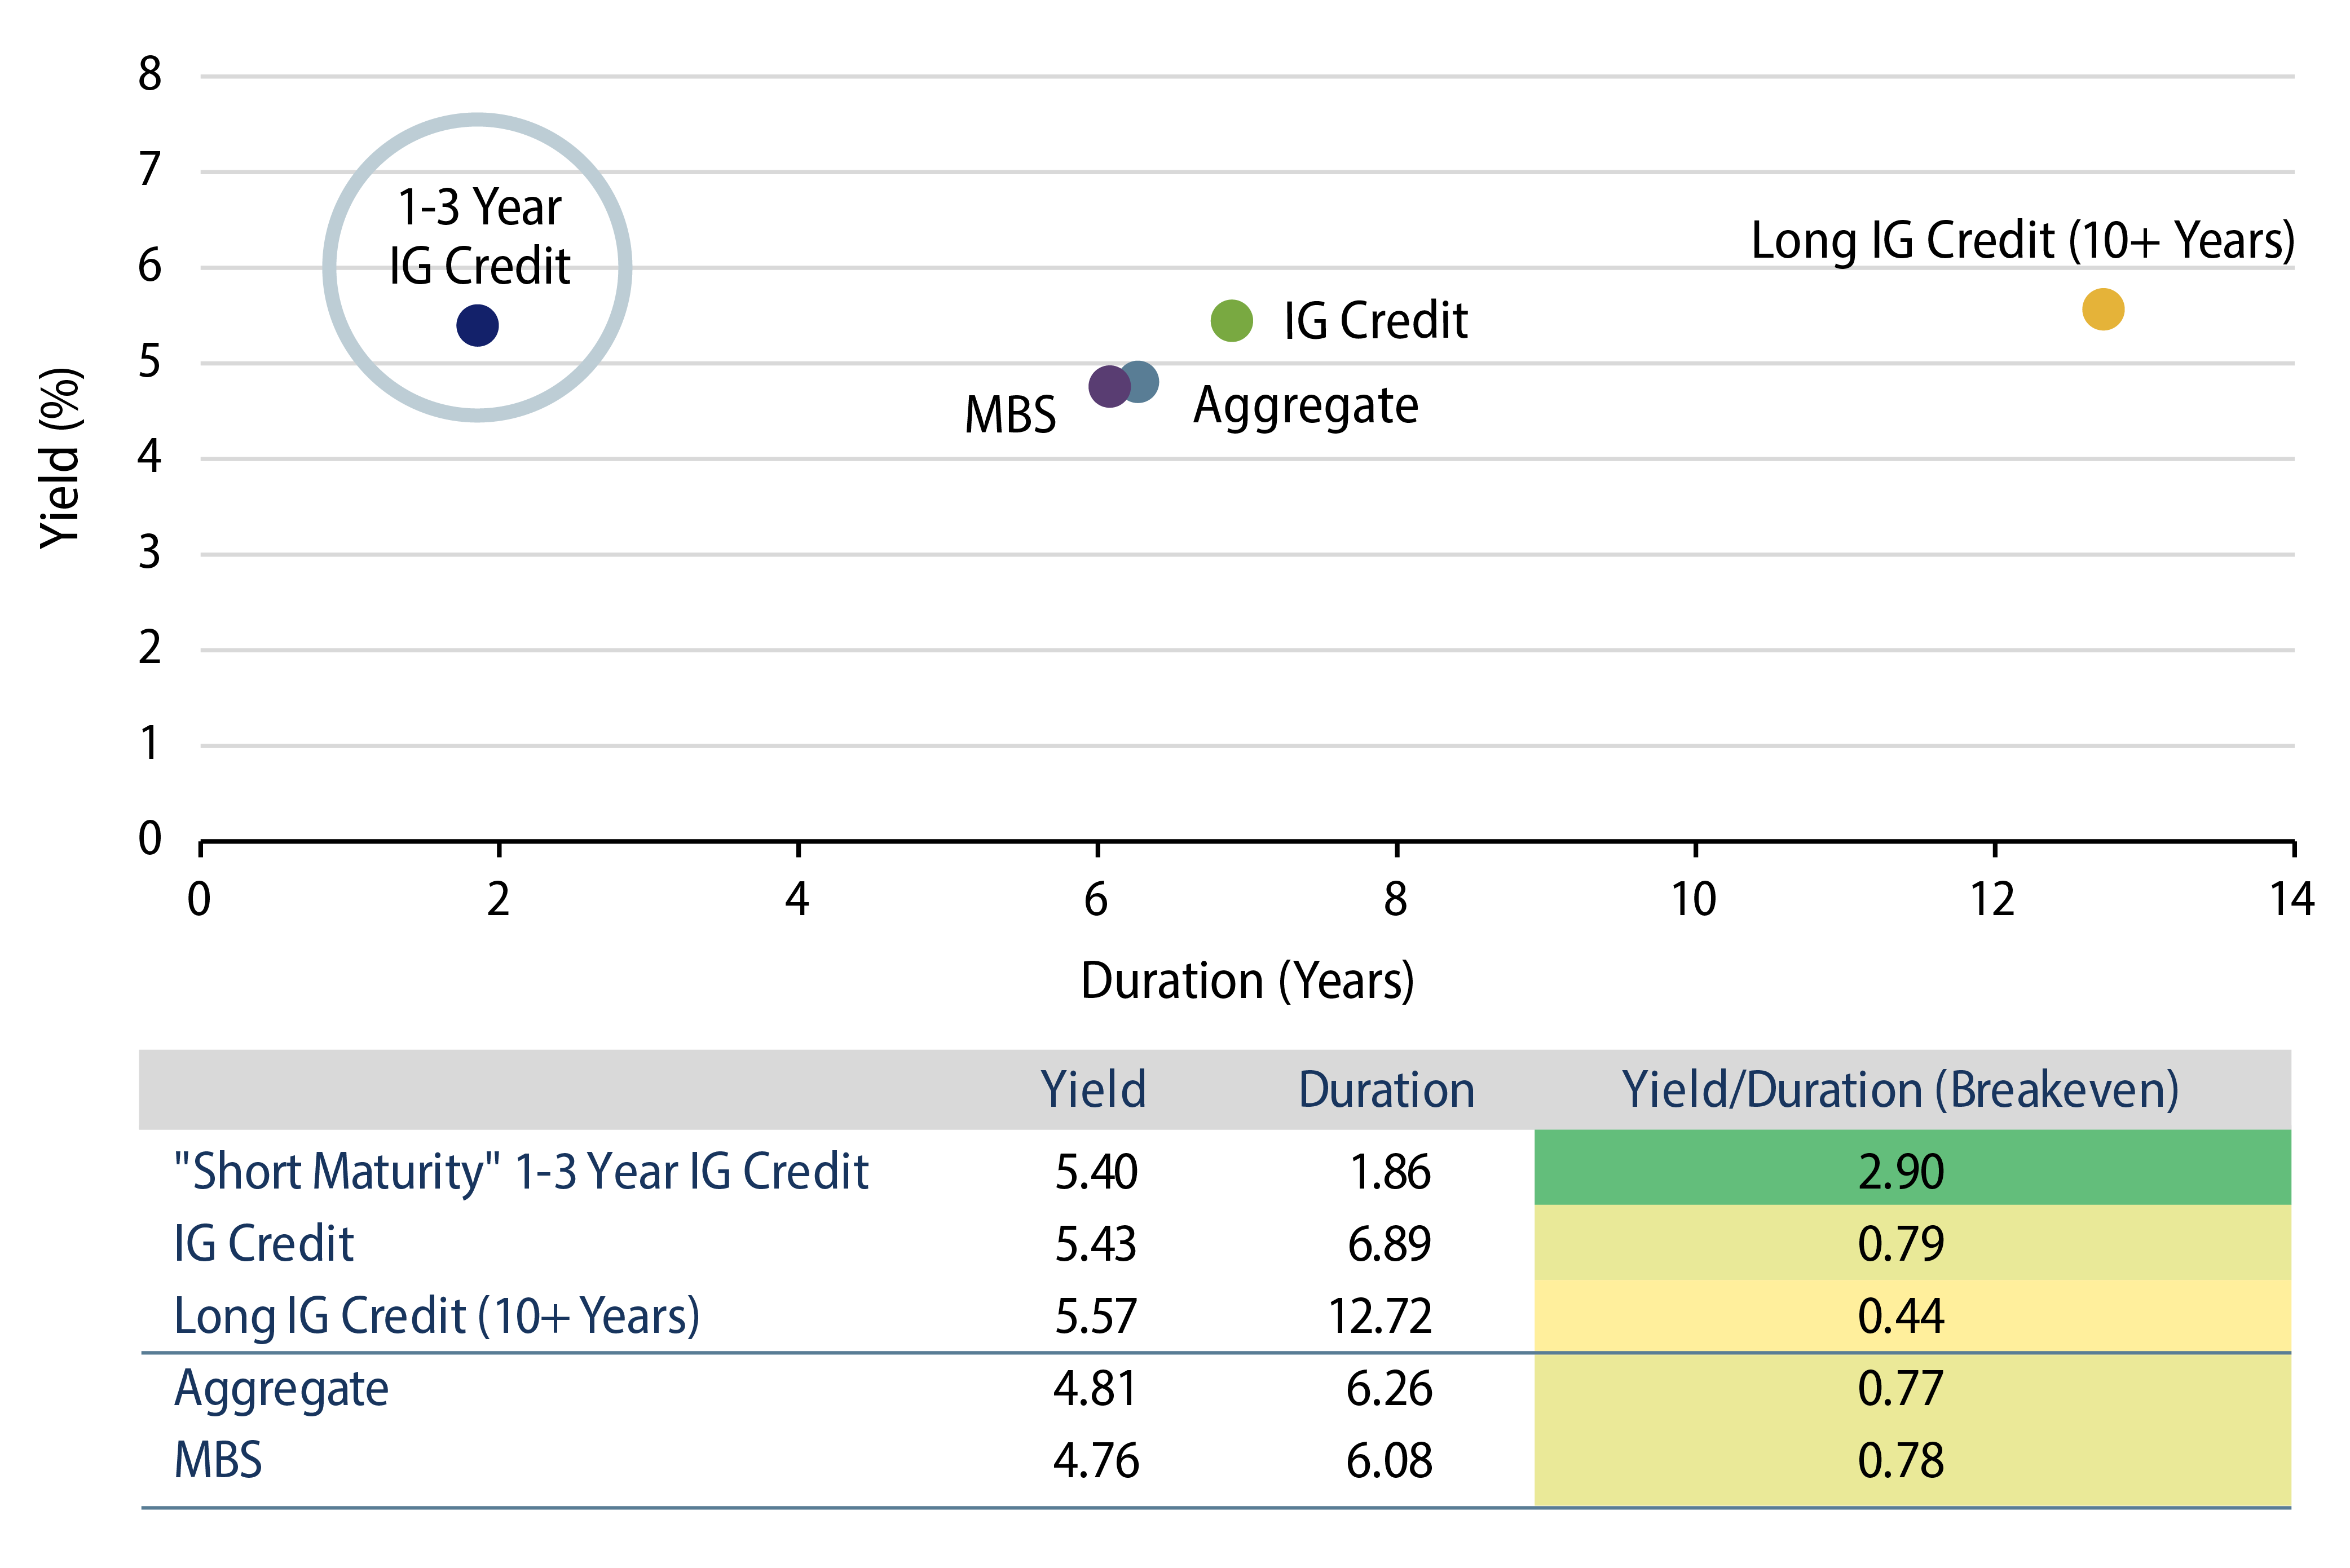 Short Maturity Credit Offers Favorable Risk/Reward Characteristics 